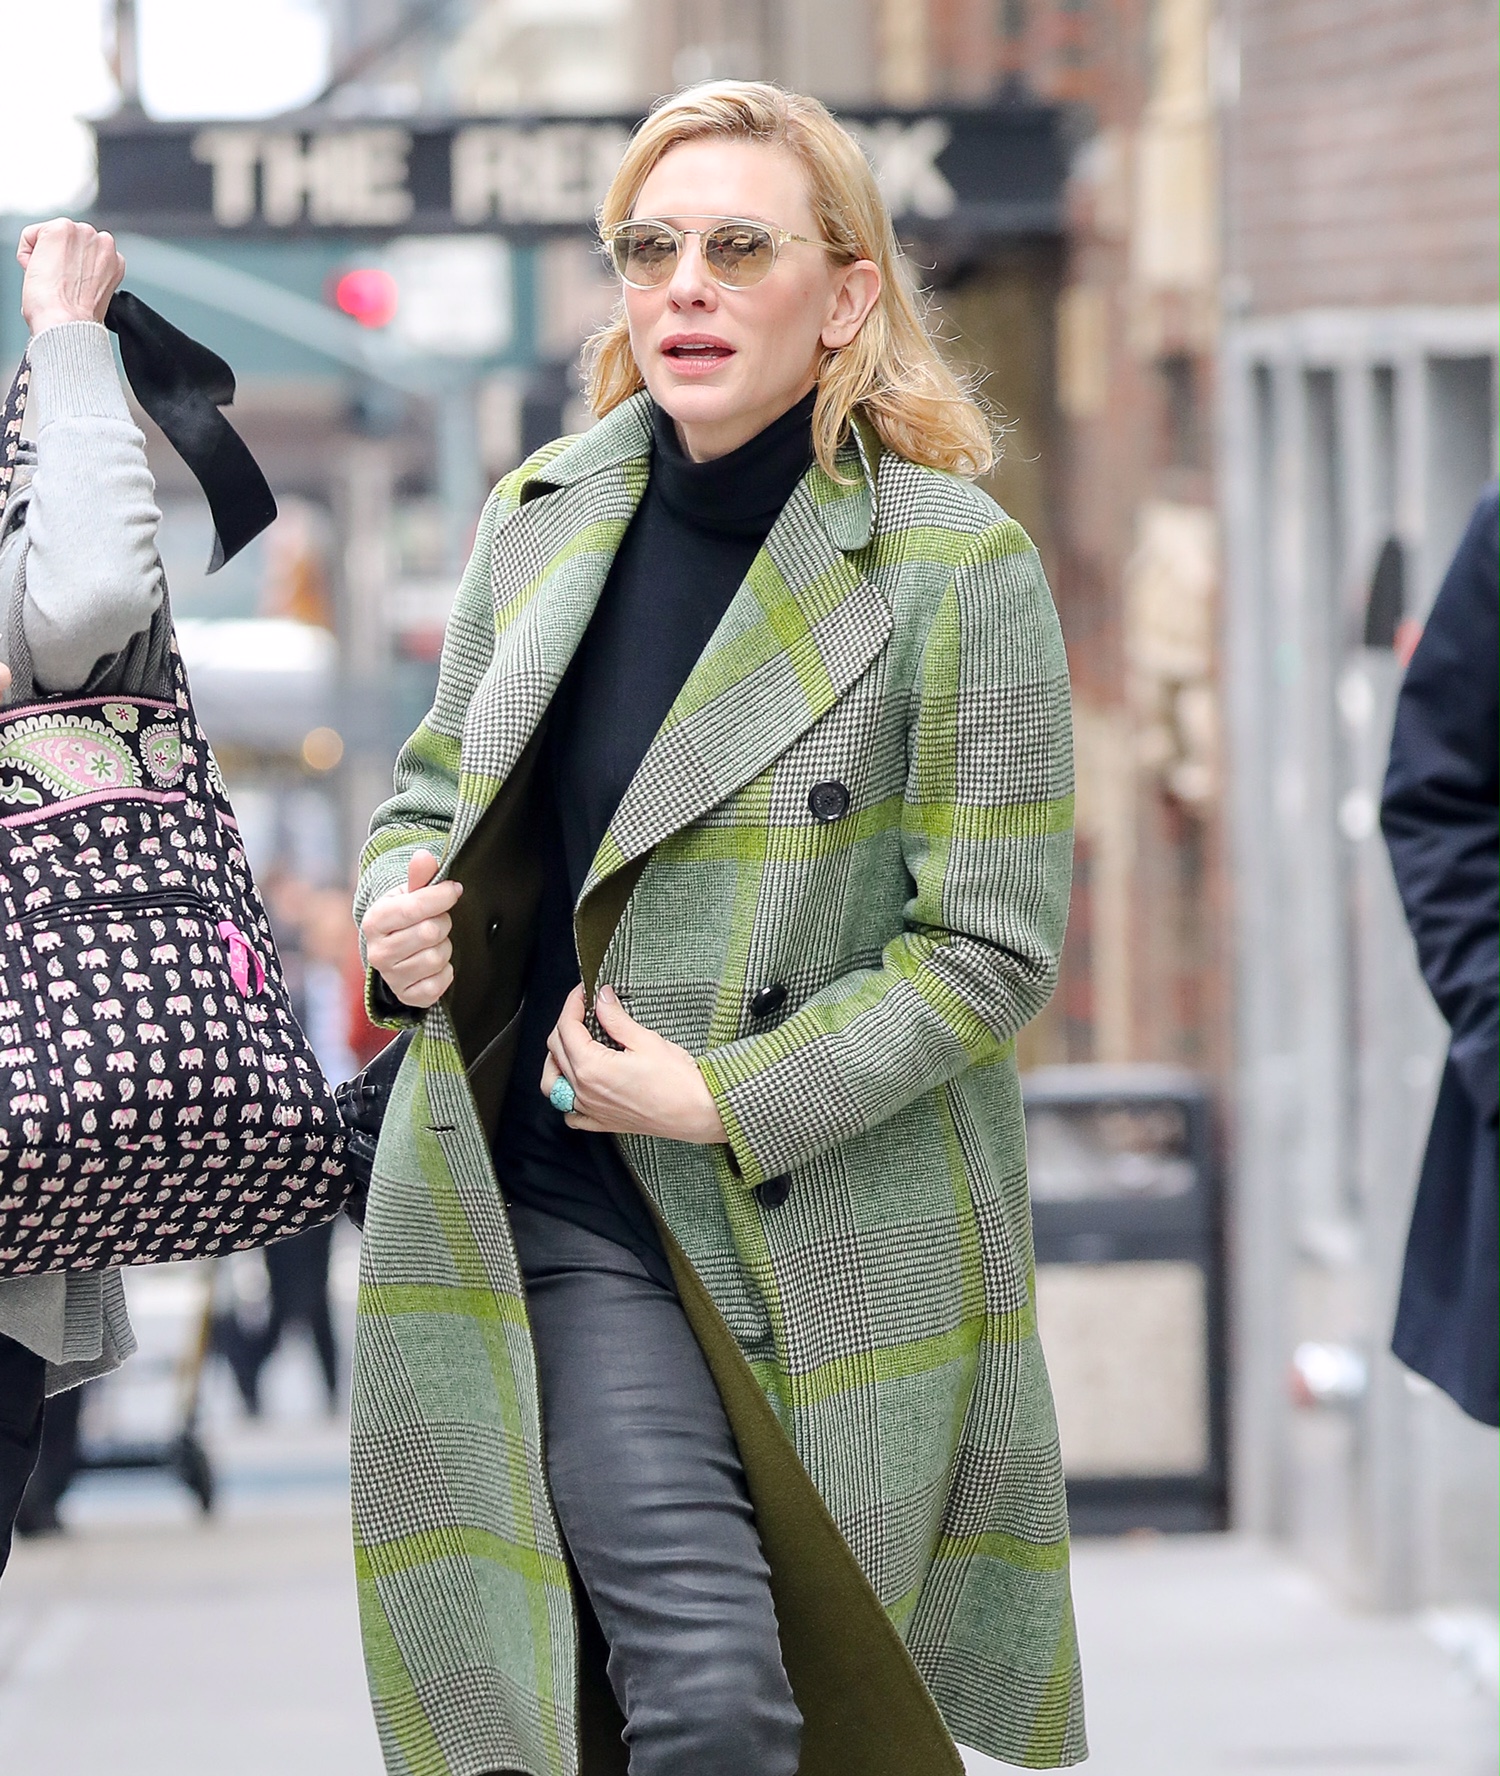 Cate Blanchett wearing Etnia Barcelona Sunglasses Ferlandina Clgd